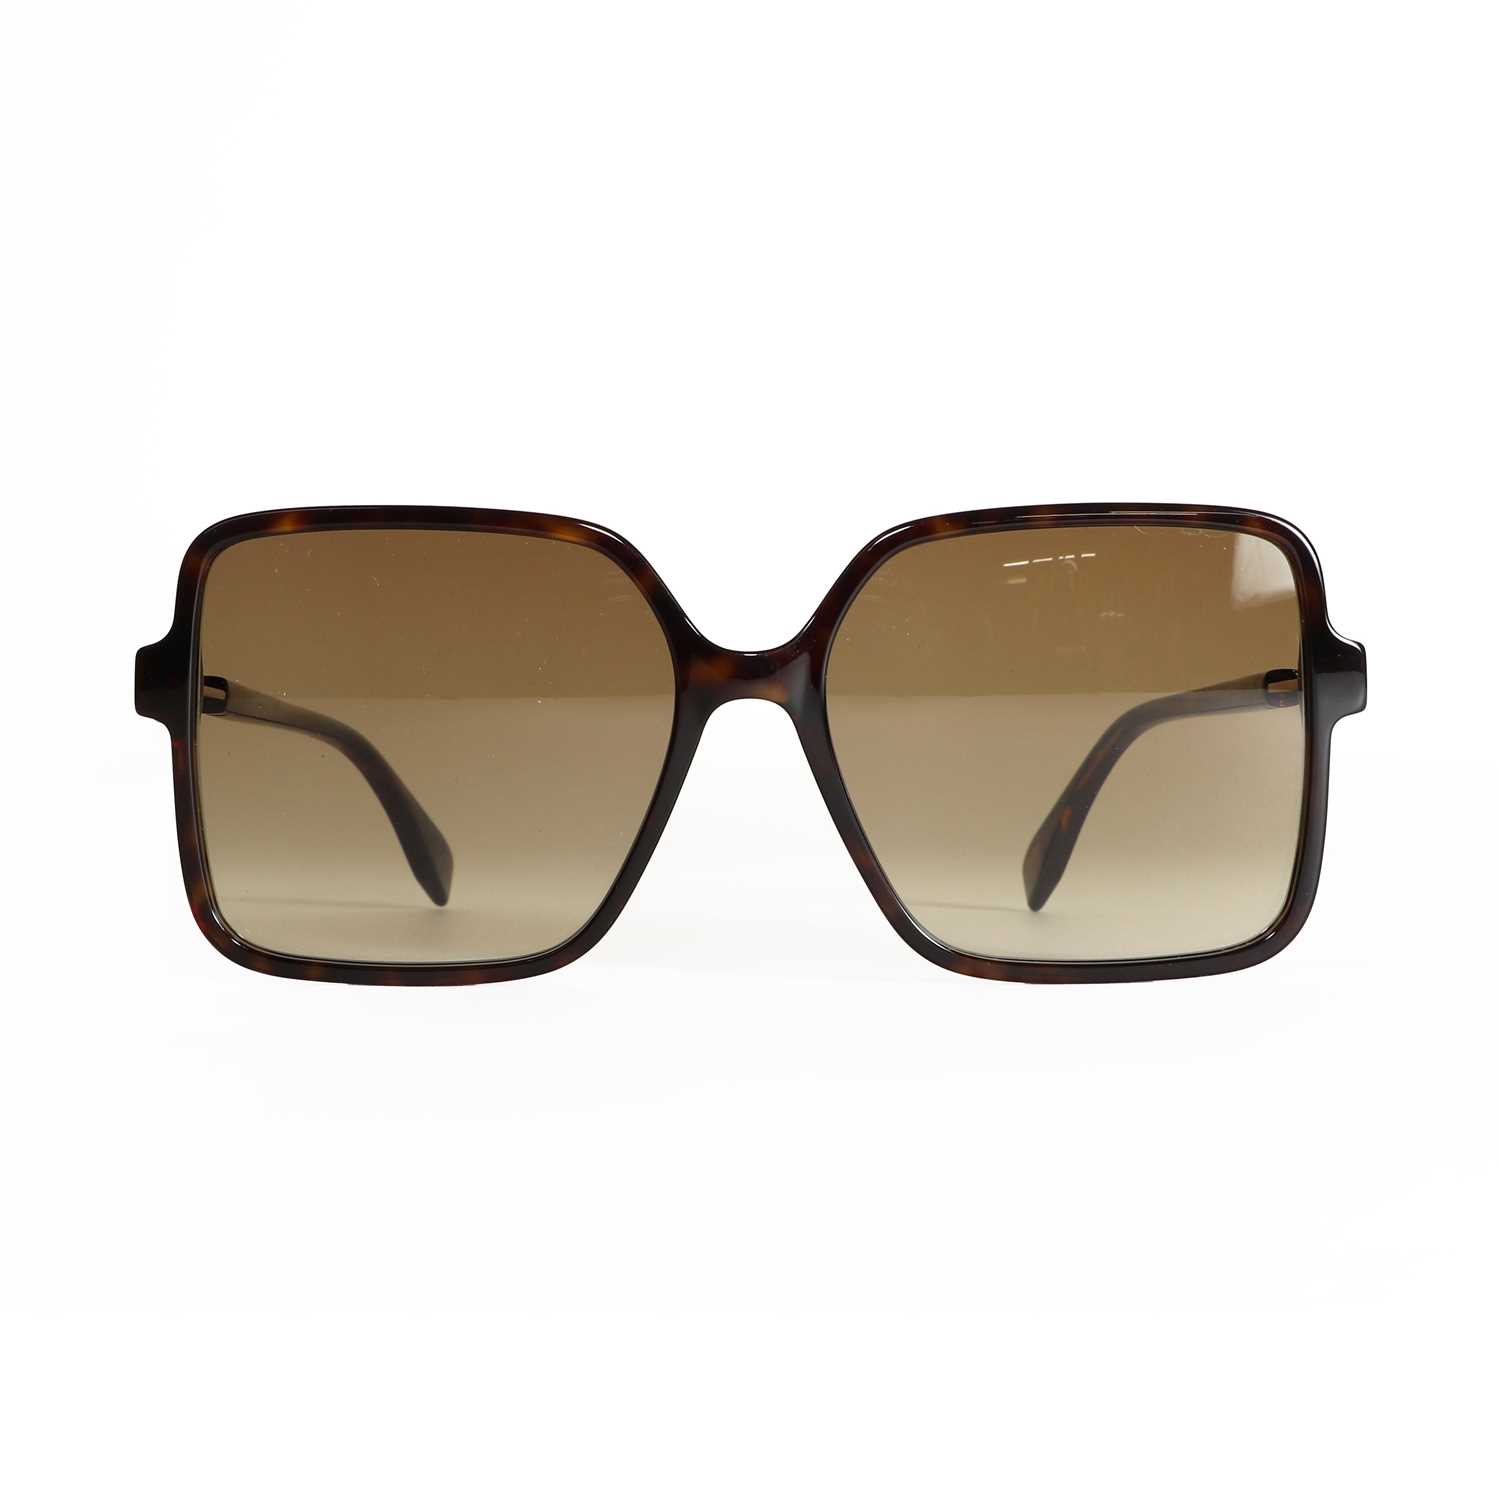 A pair of Fendi faux tortoiseshell framed sunglasses, - Image 3 of 10